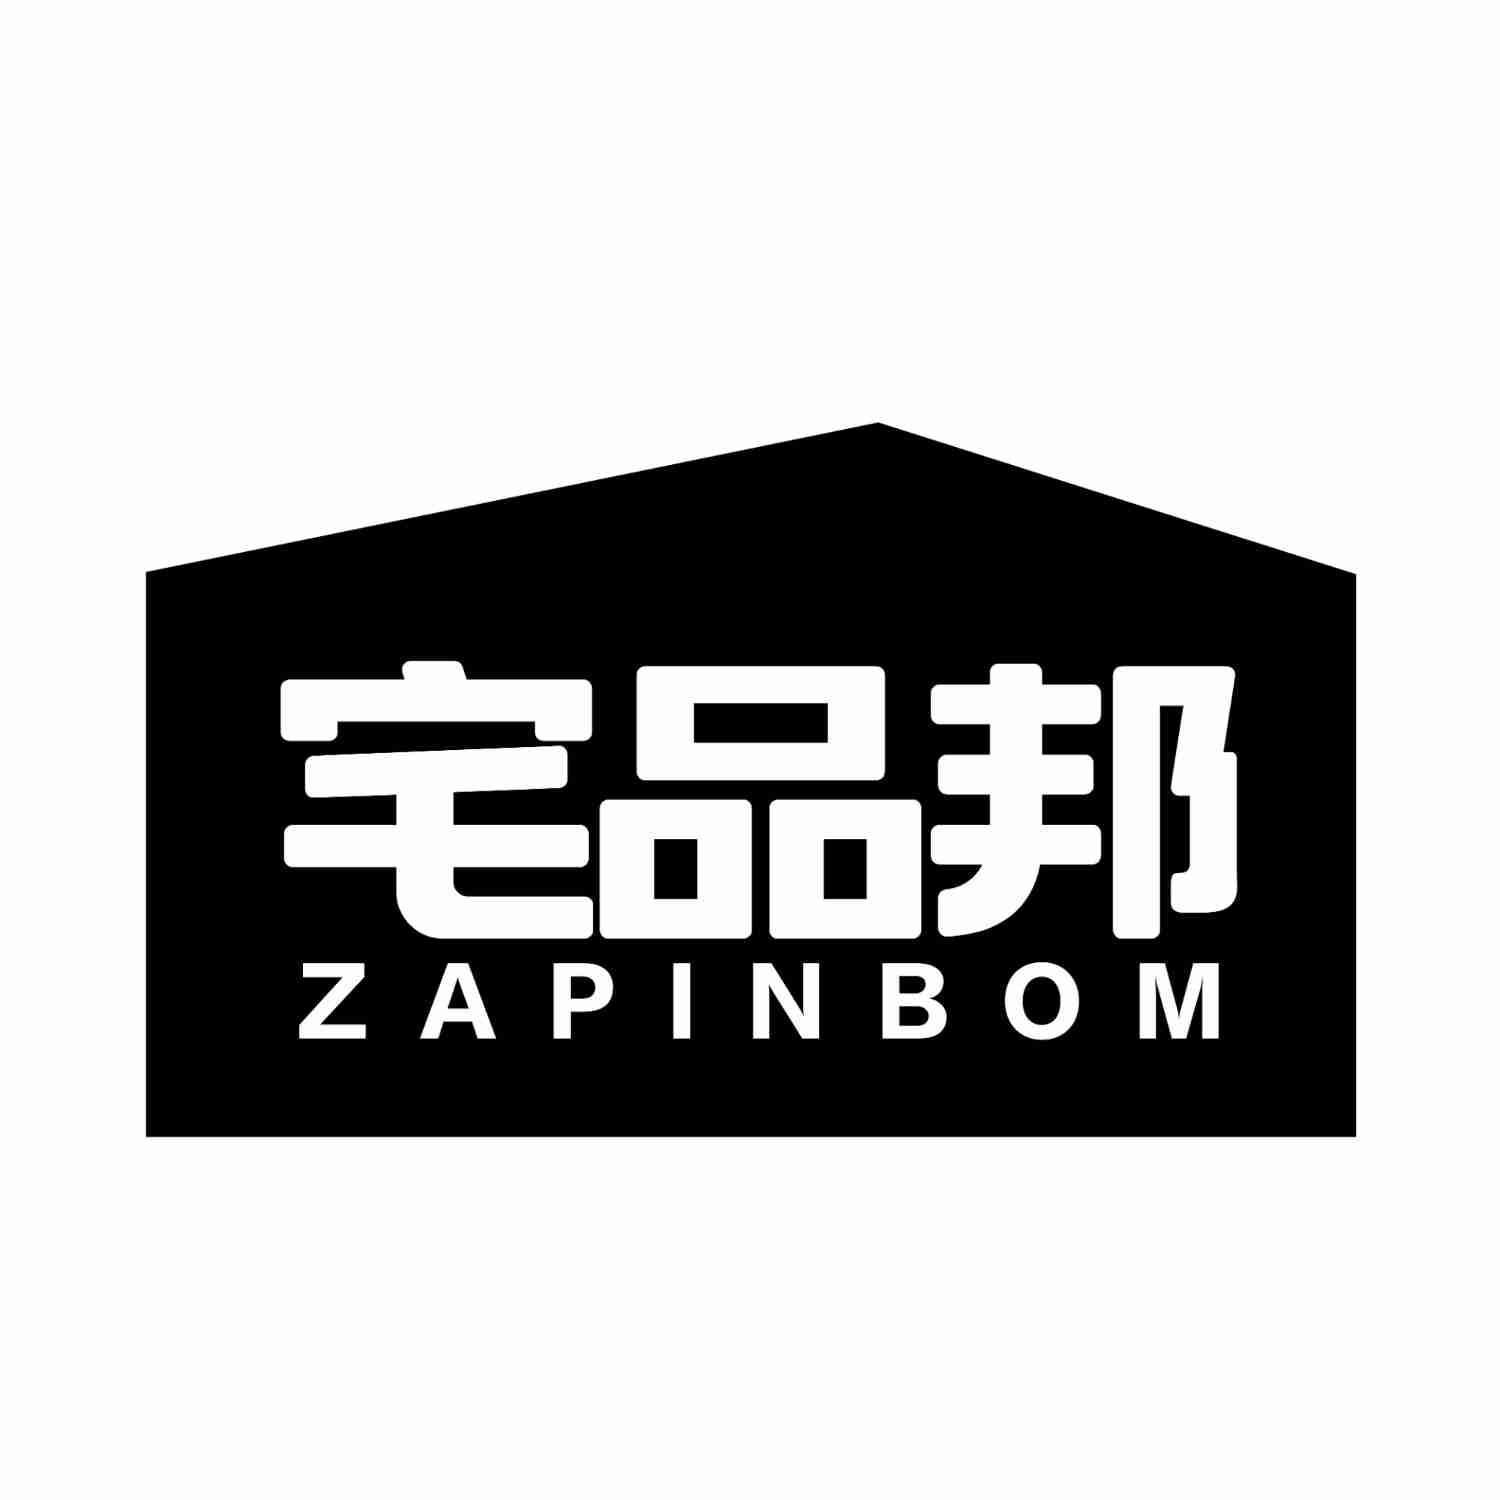 宅品邦 ZAPINBOM